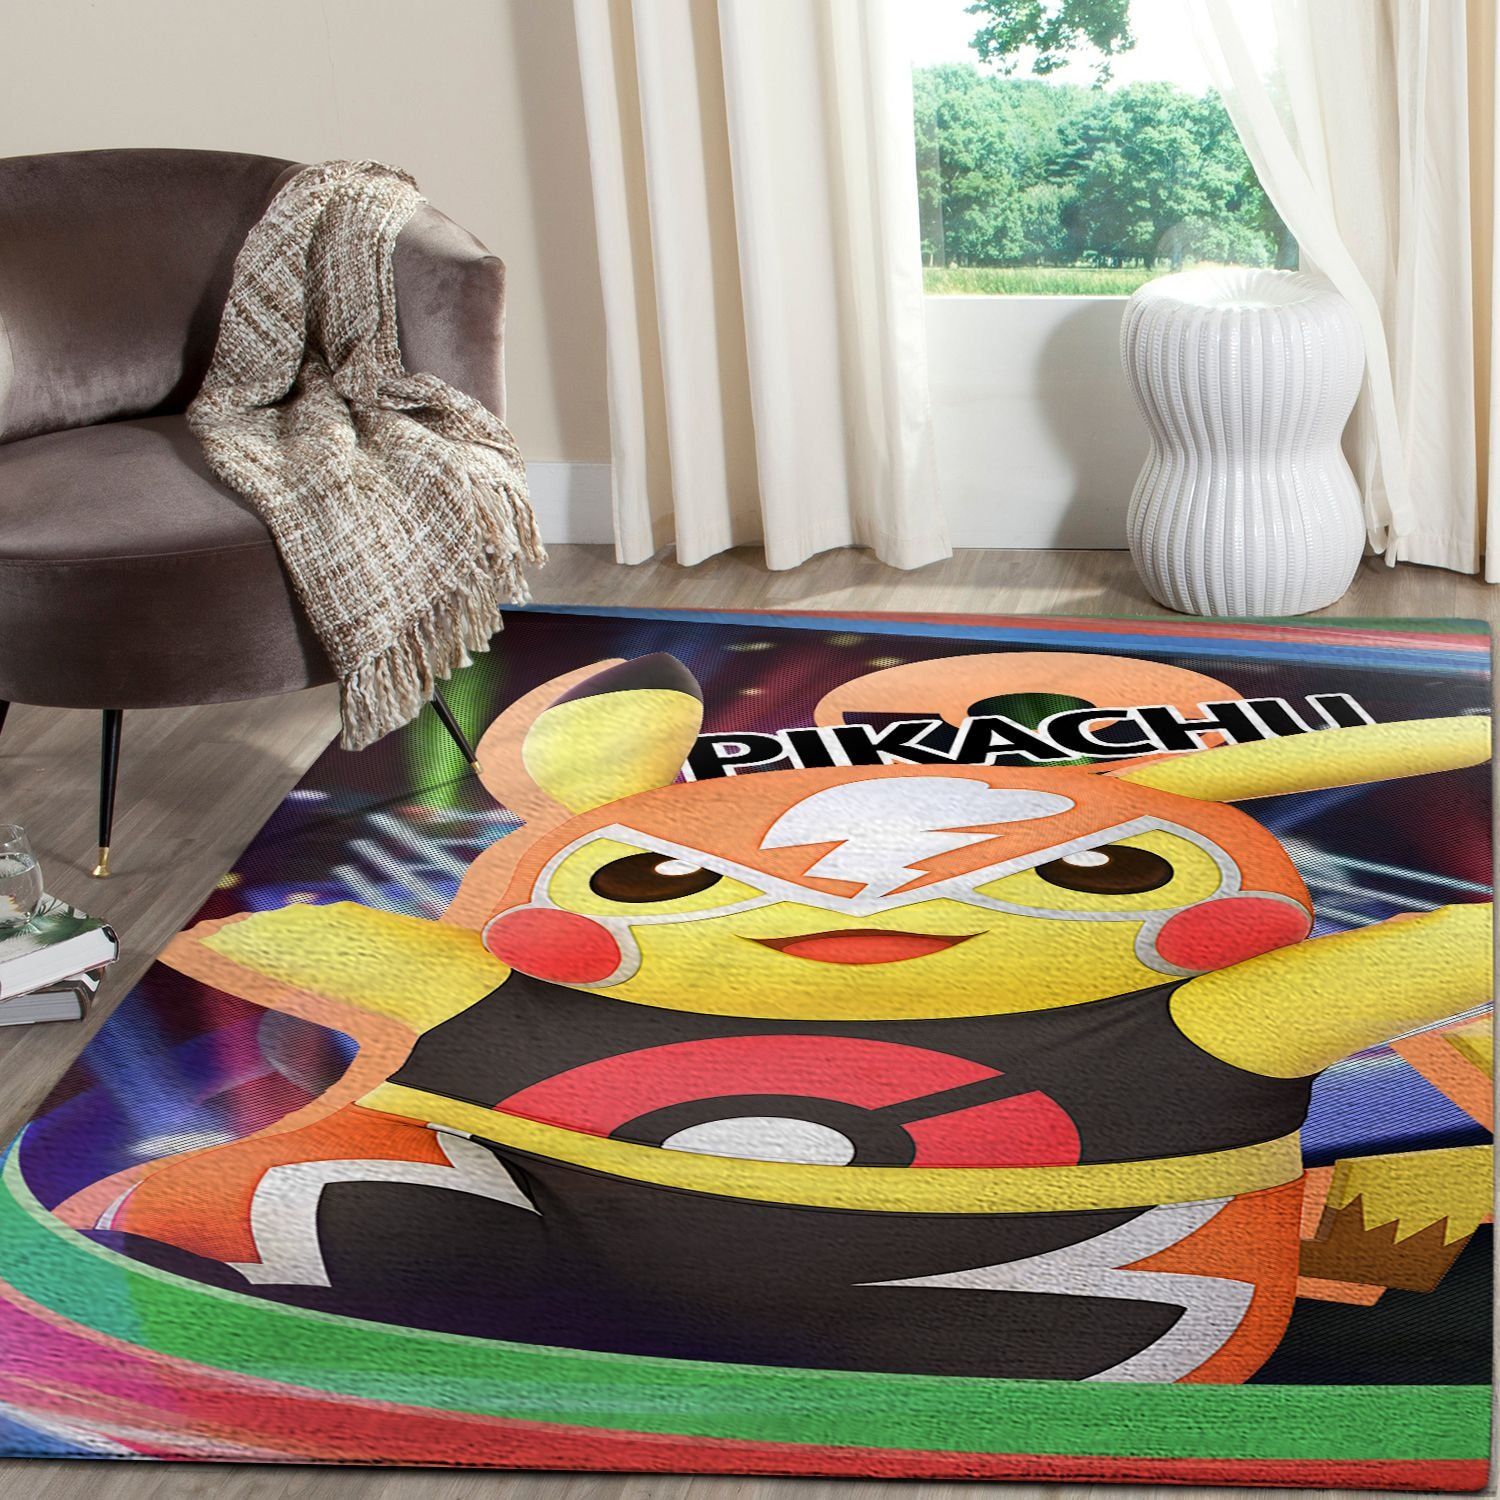 Detective Pikachu rug